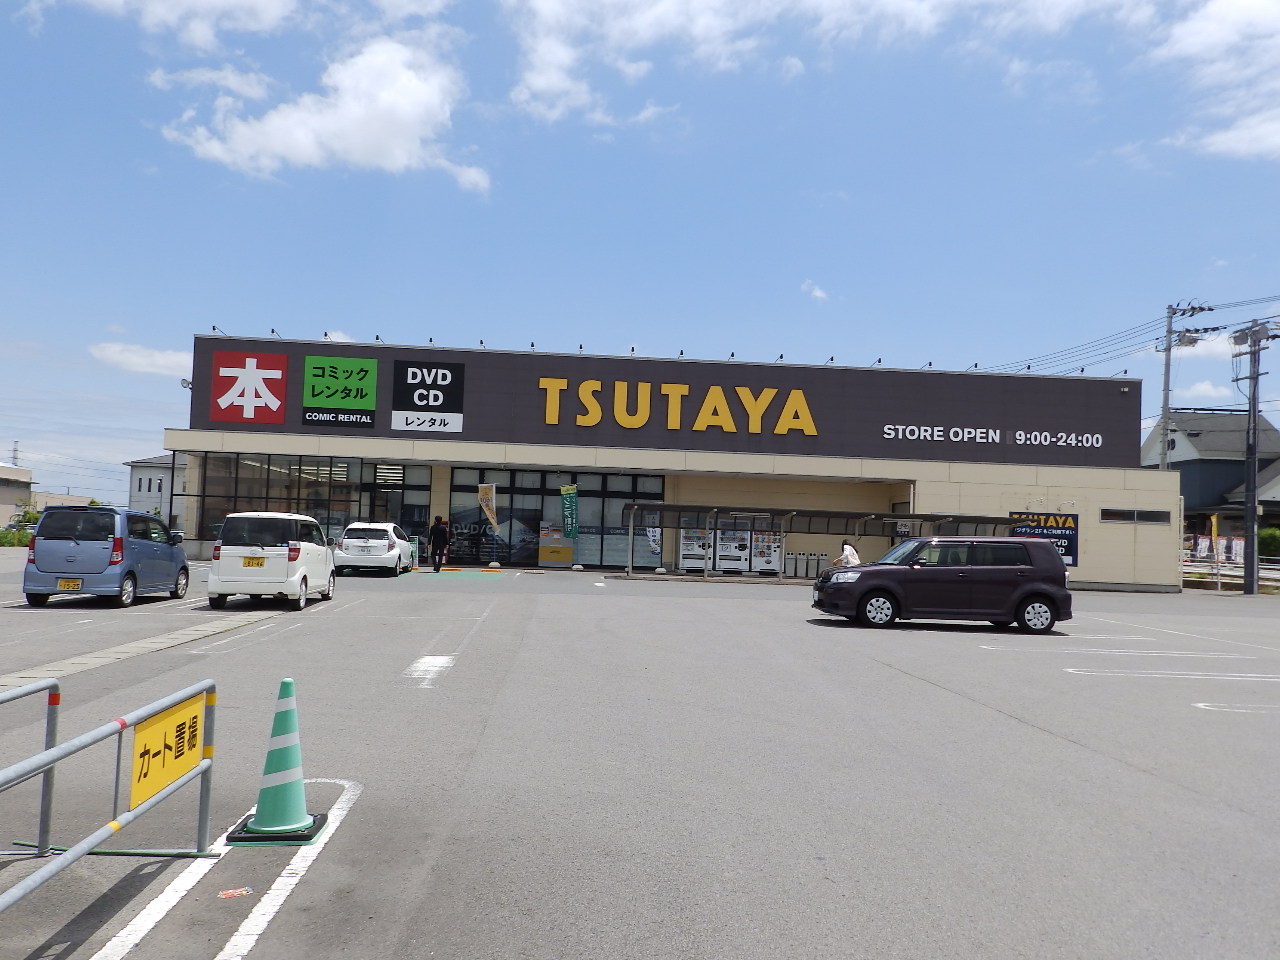 Rental video. TSUTAYA Ishii shop 1104m up (video rental)